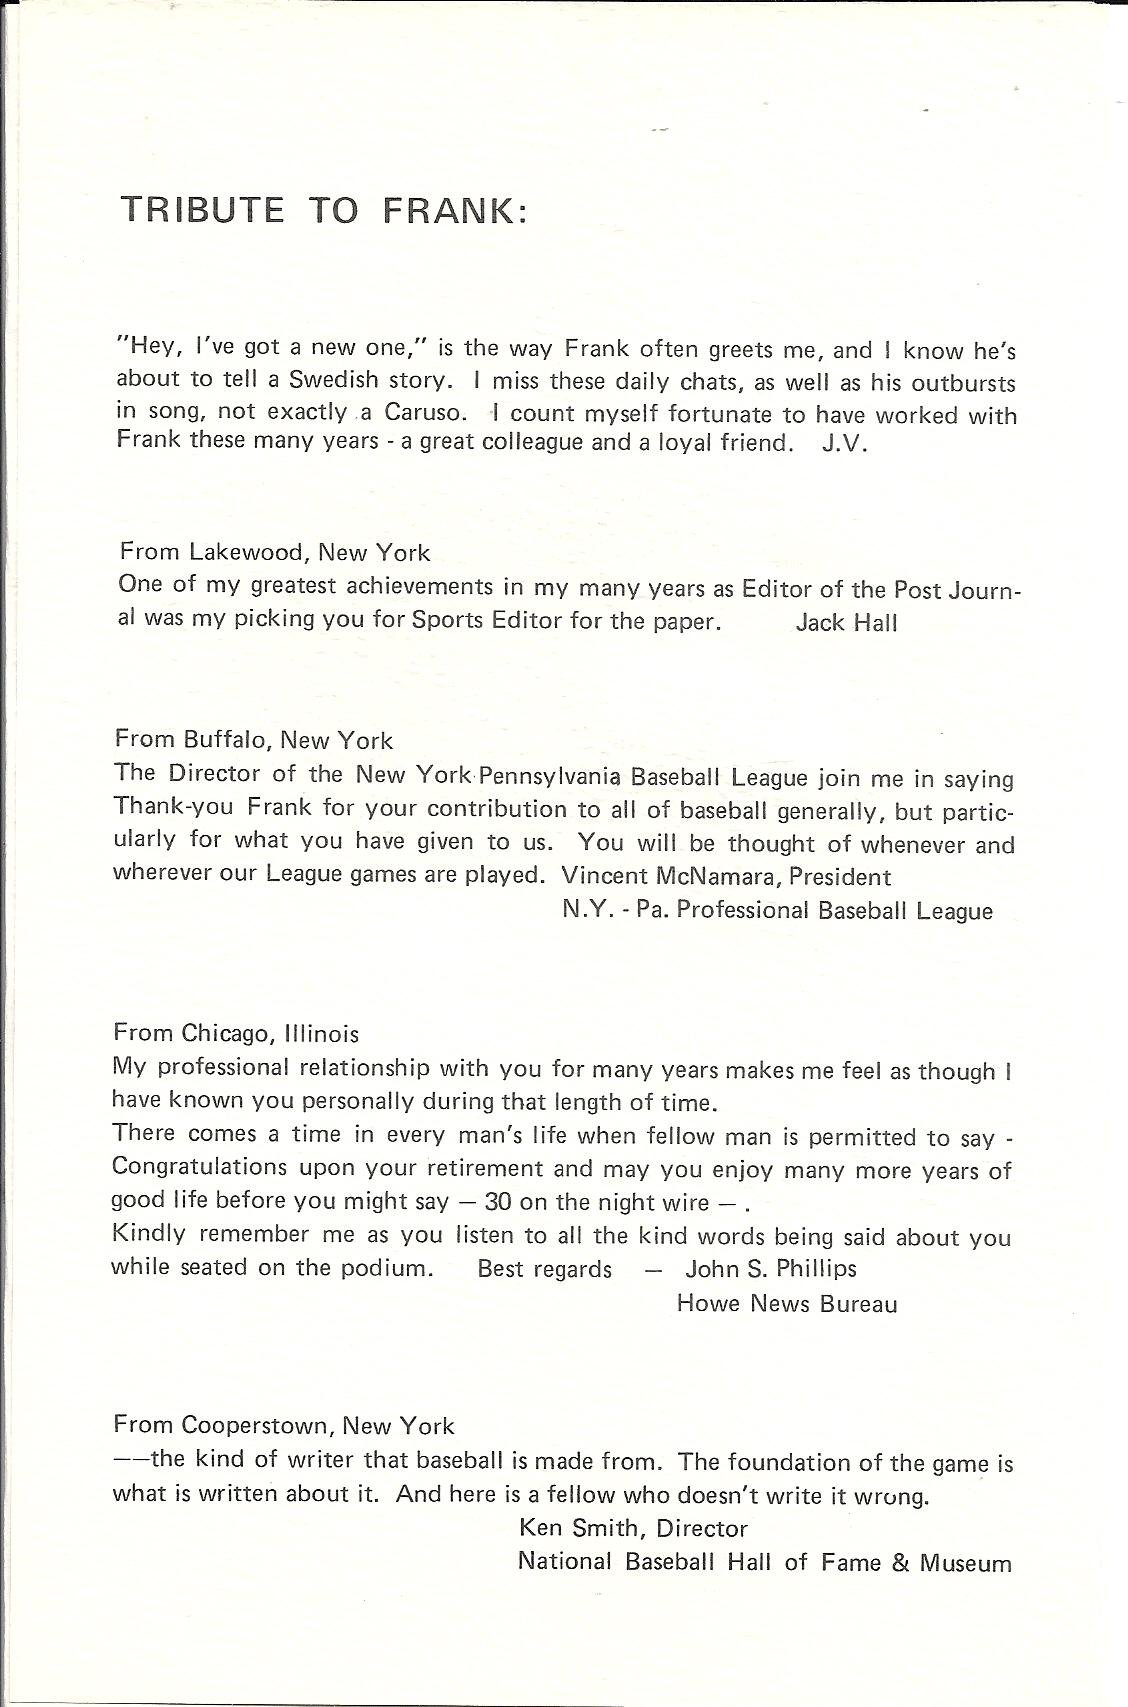 Frank Hyde Testimonial Dinner program booklet page 5